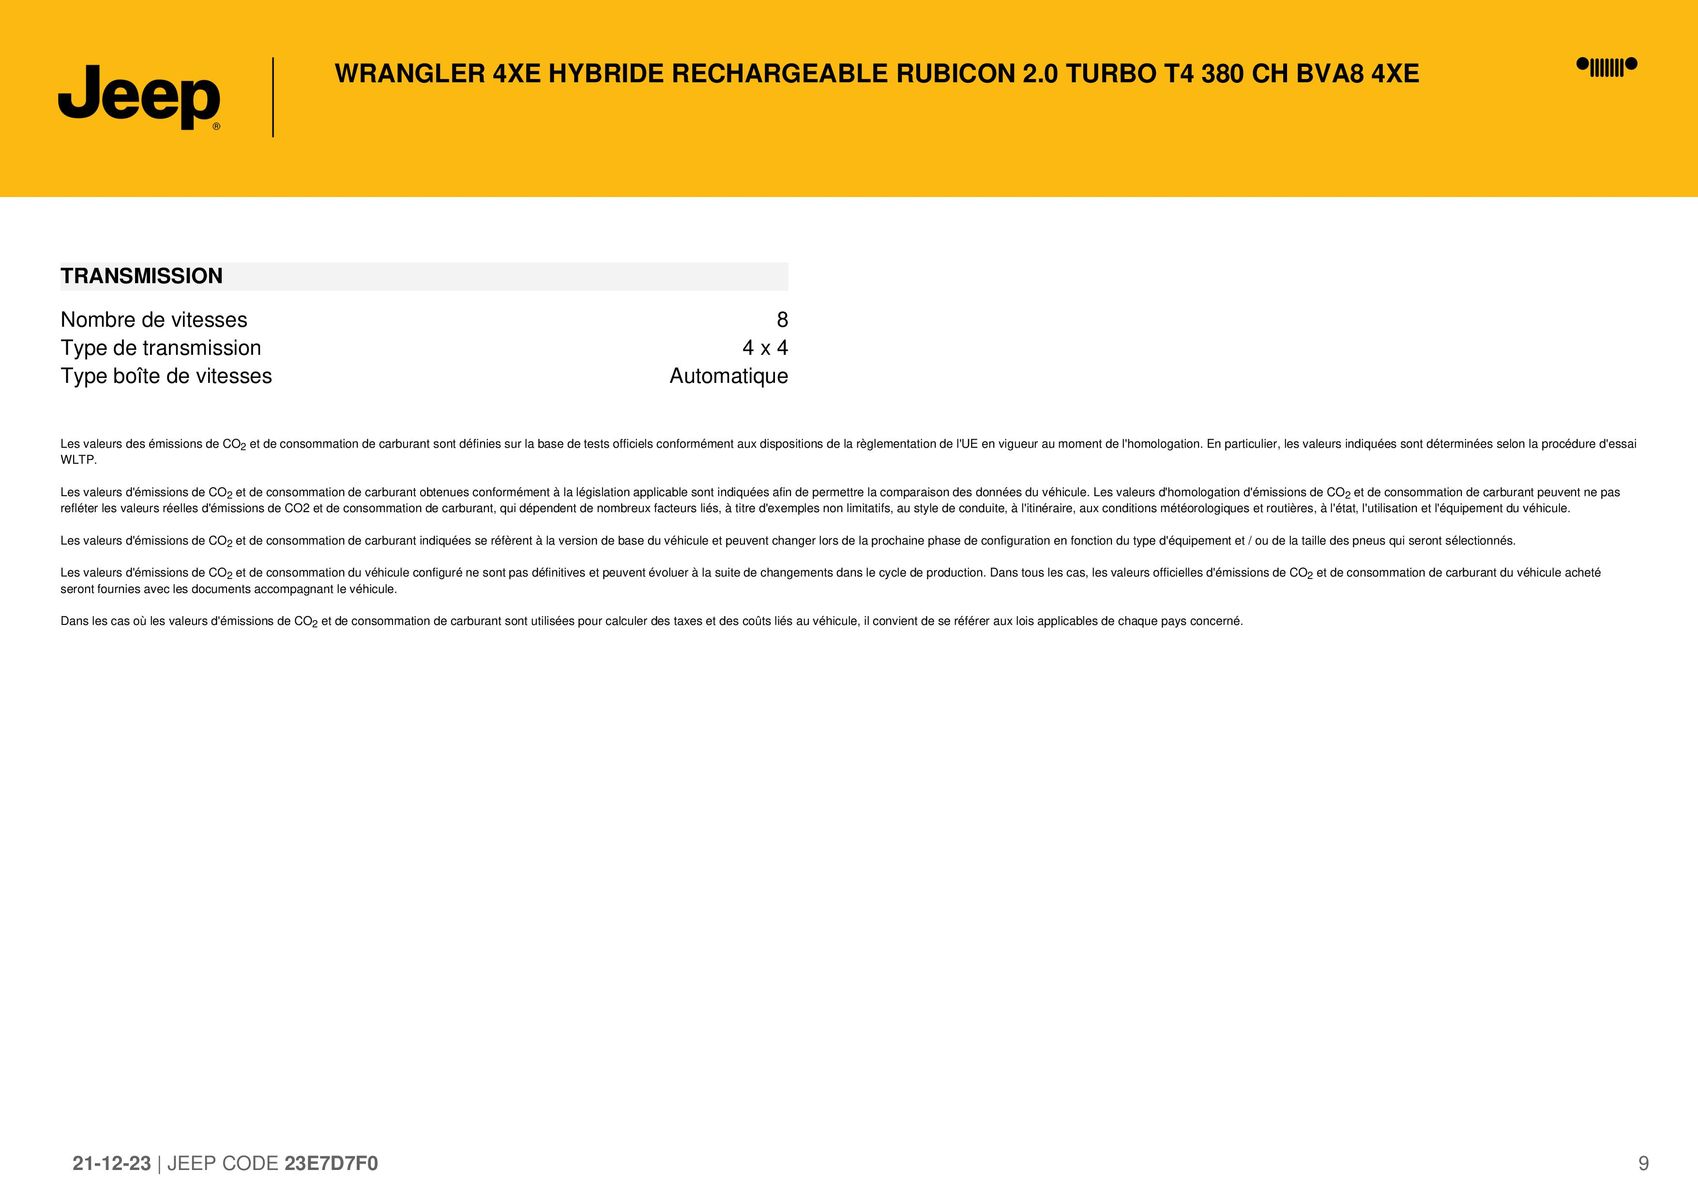 Catalogue WRANGLER 4XE HYBRIDE RECHARGEABLE RUBICON 2.0 TURBO T4 380 CH BVA8 4XE, page 00009